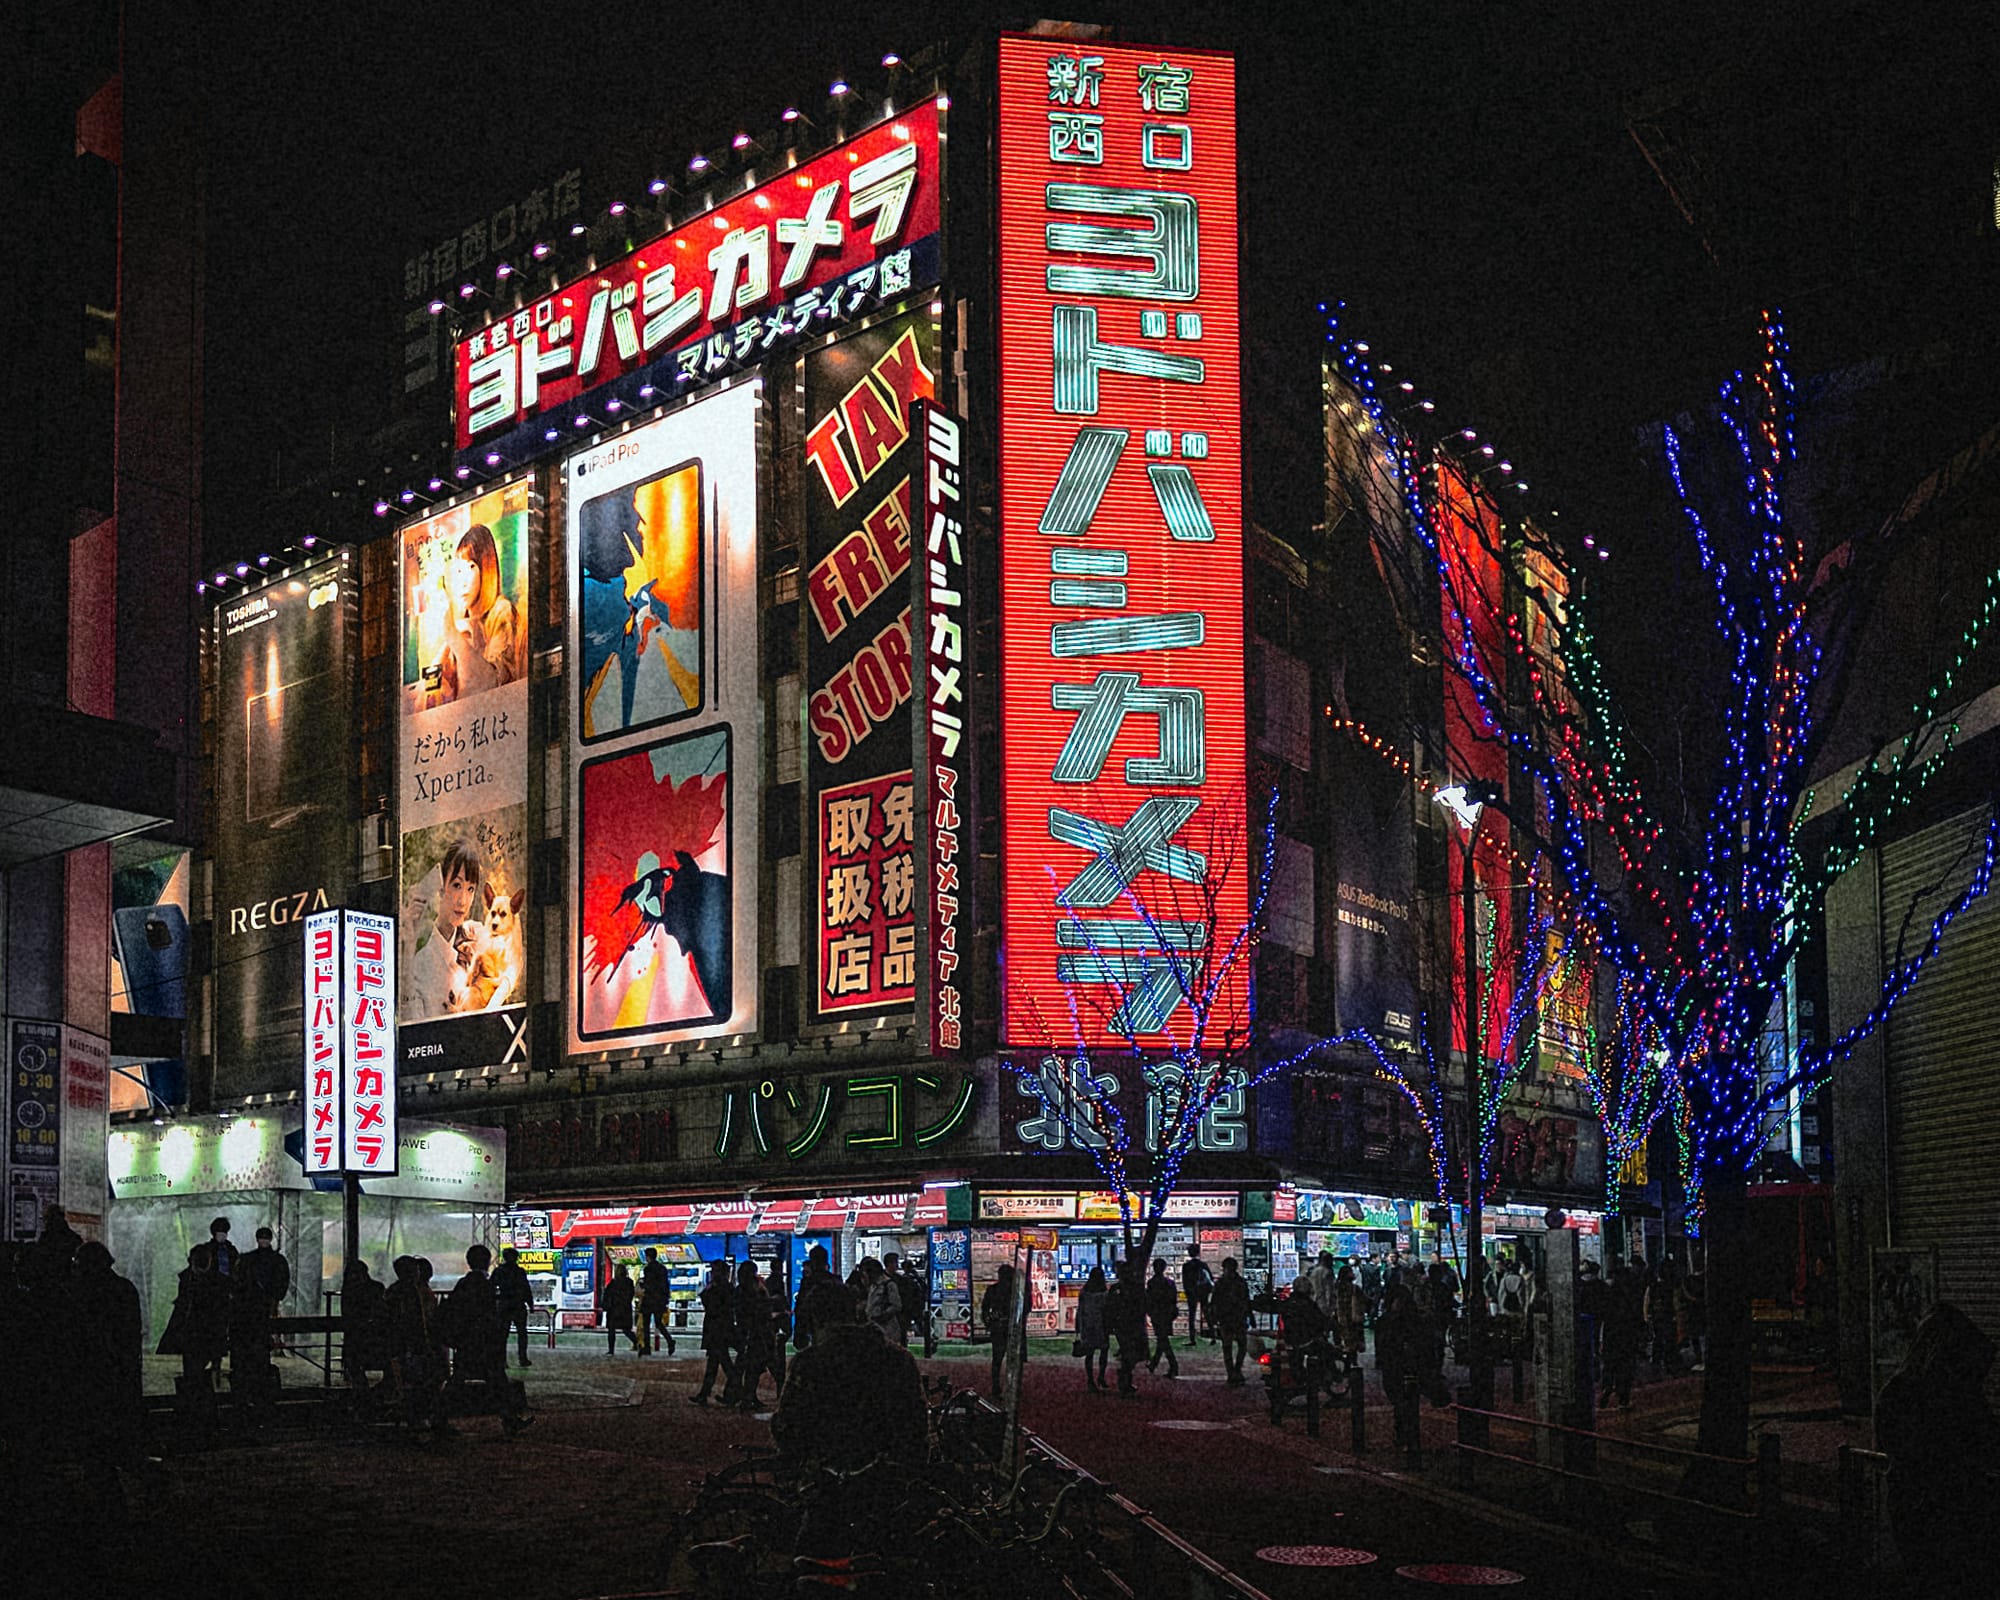 Tokyo lights at night. This is a large sign on the Yodobashi camera store in Shinjuku.